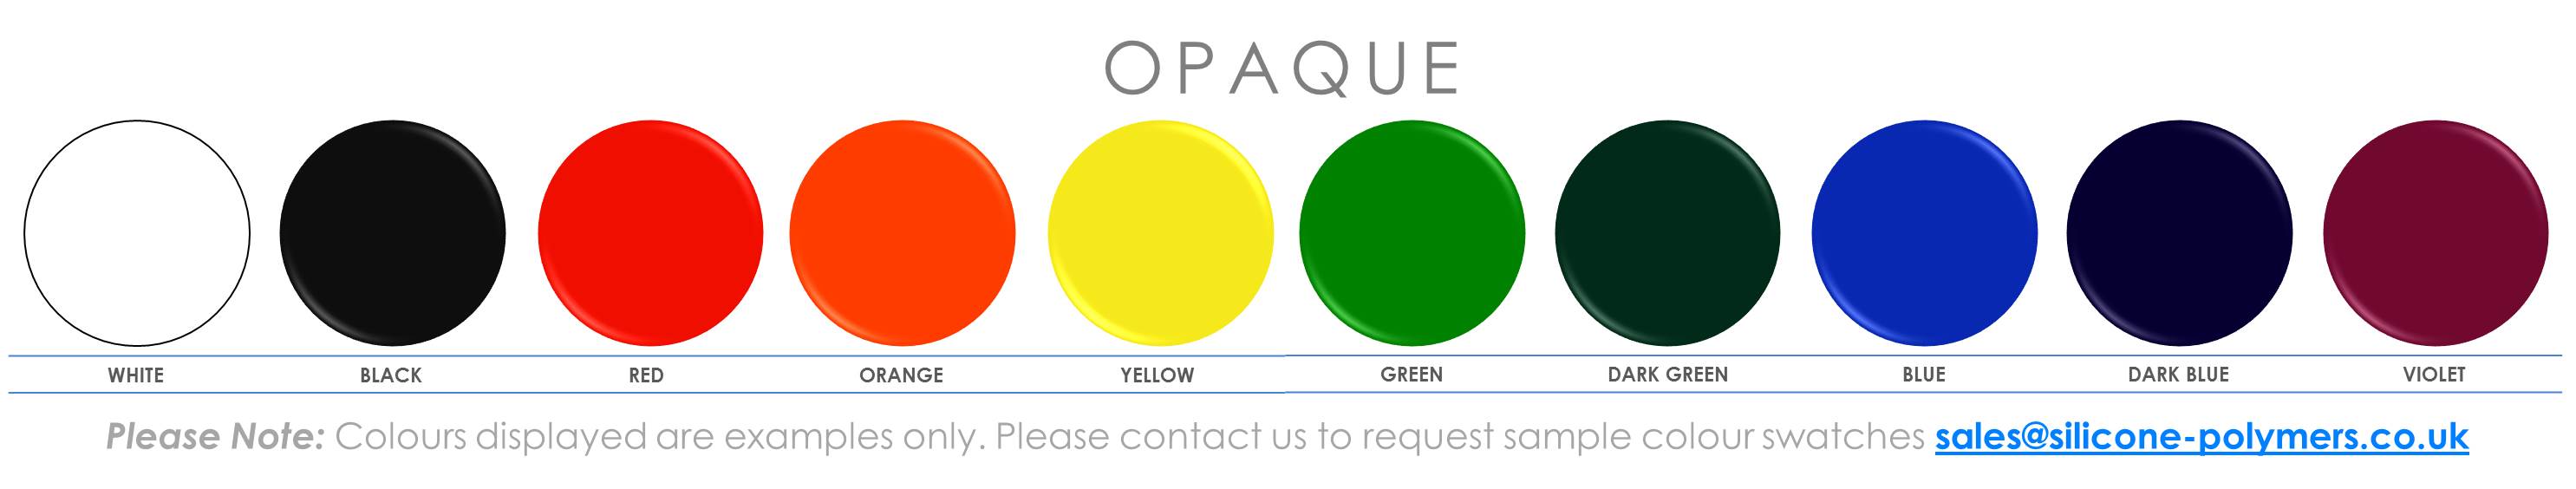 Opaque Colour Swatches